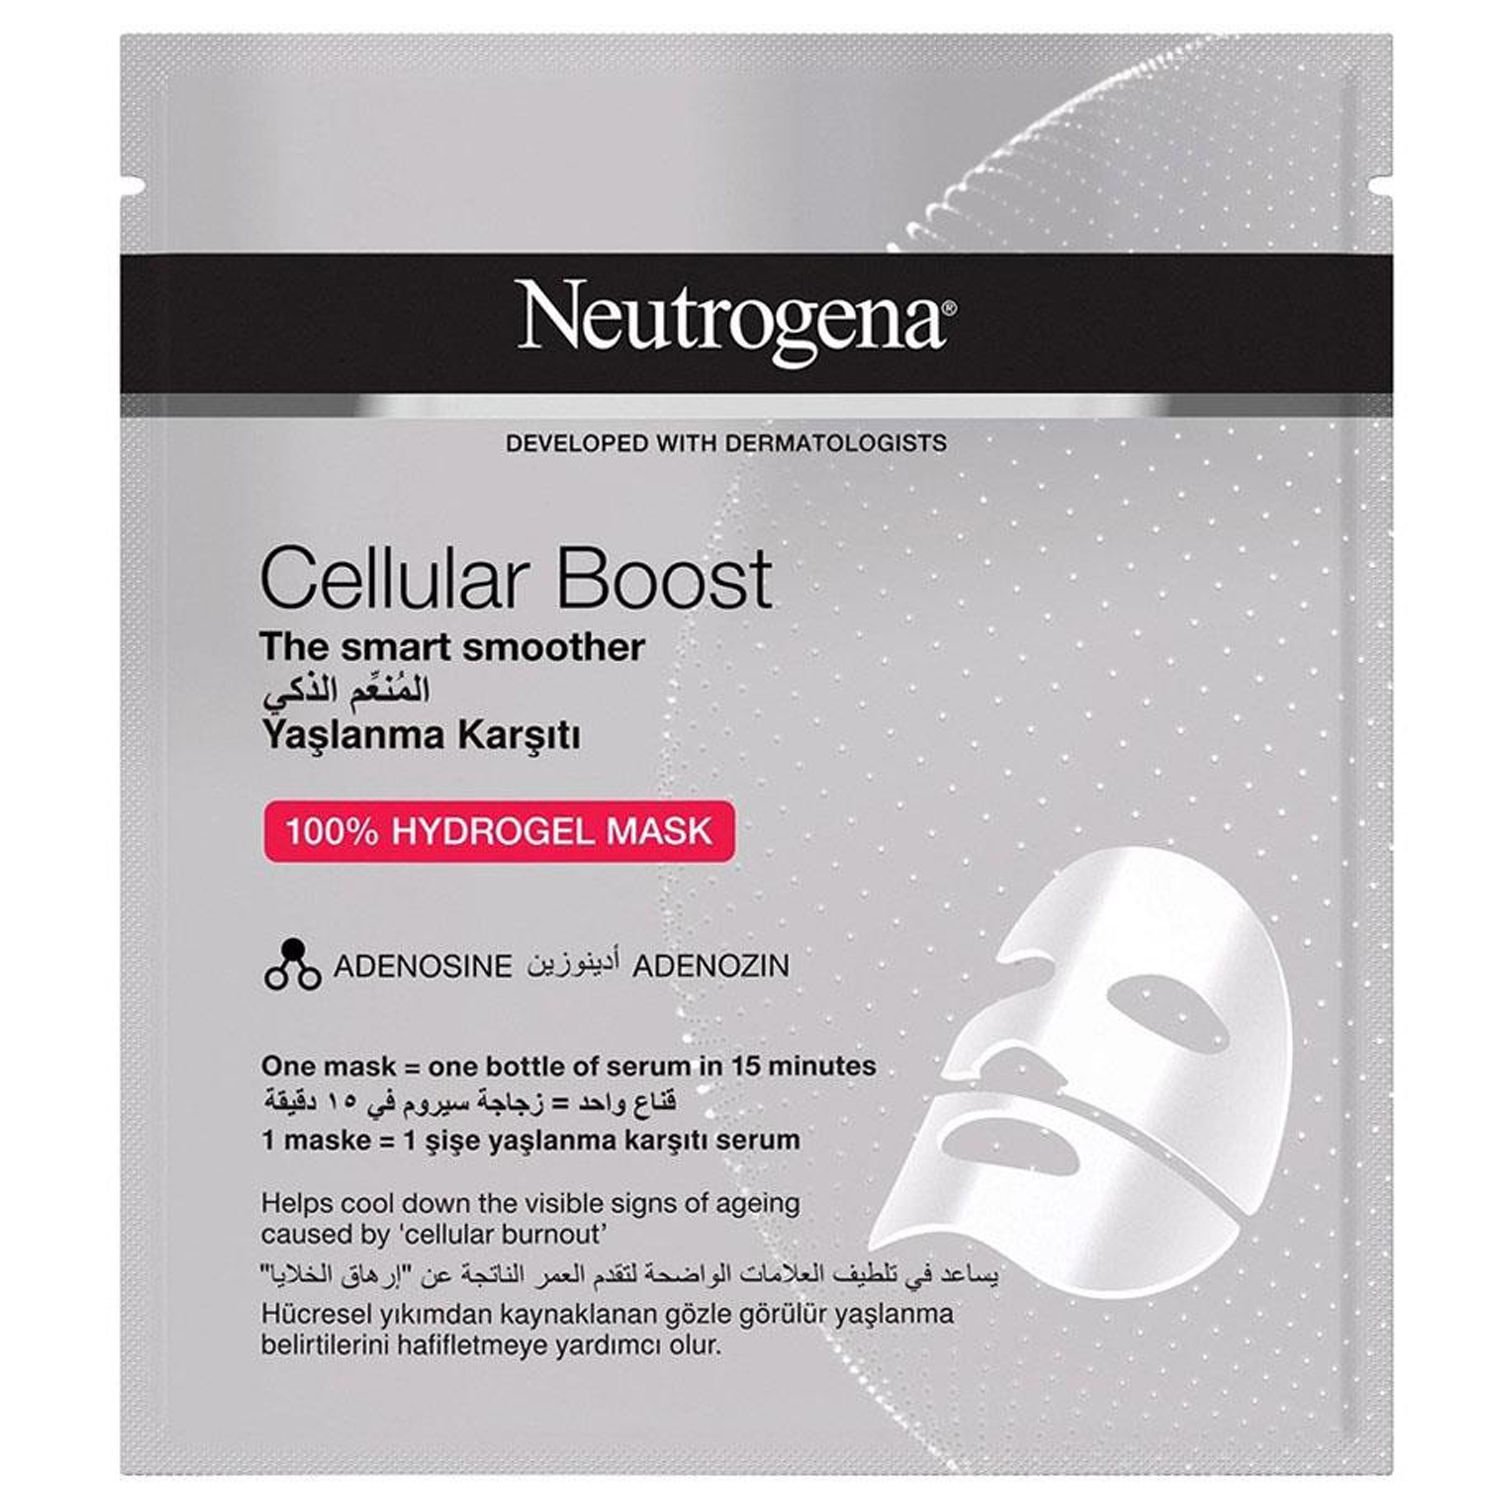 Neutrogena Cellular Boost Yaşlan ma Karşıtı Hidrojel Maske 30 ml